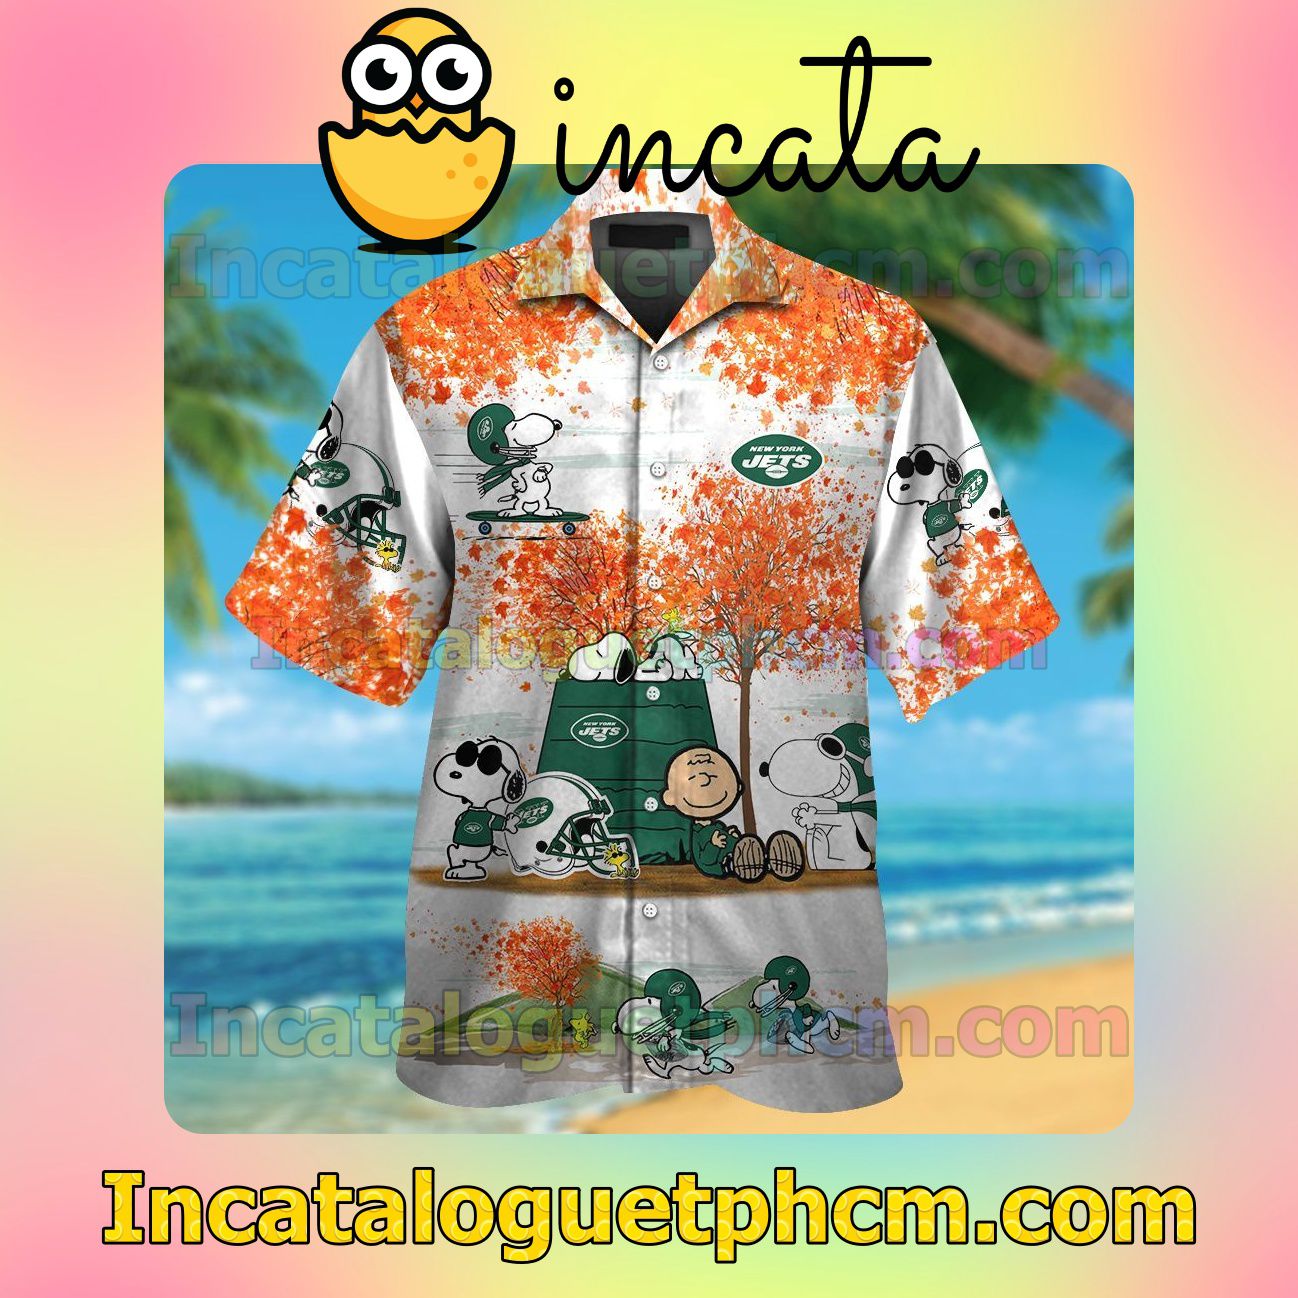 New York Jets Snoopy Autumn Beach Vacation Shirt, Swim Shorts